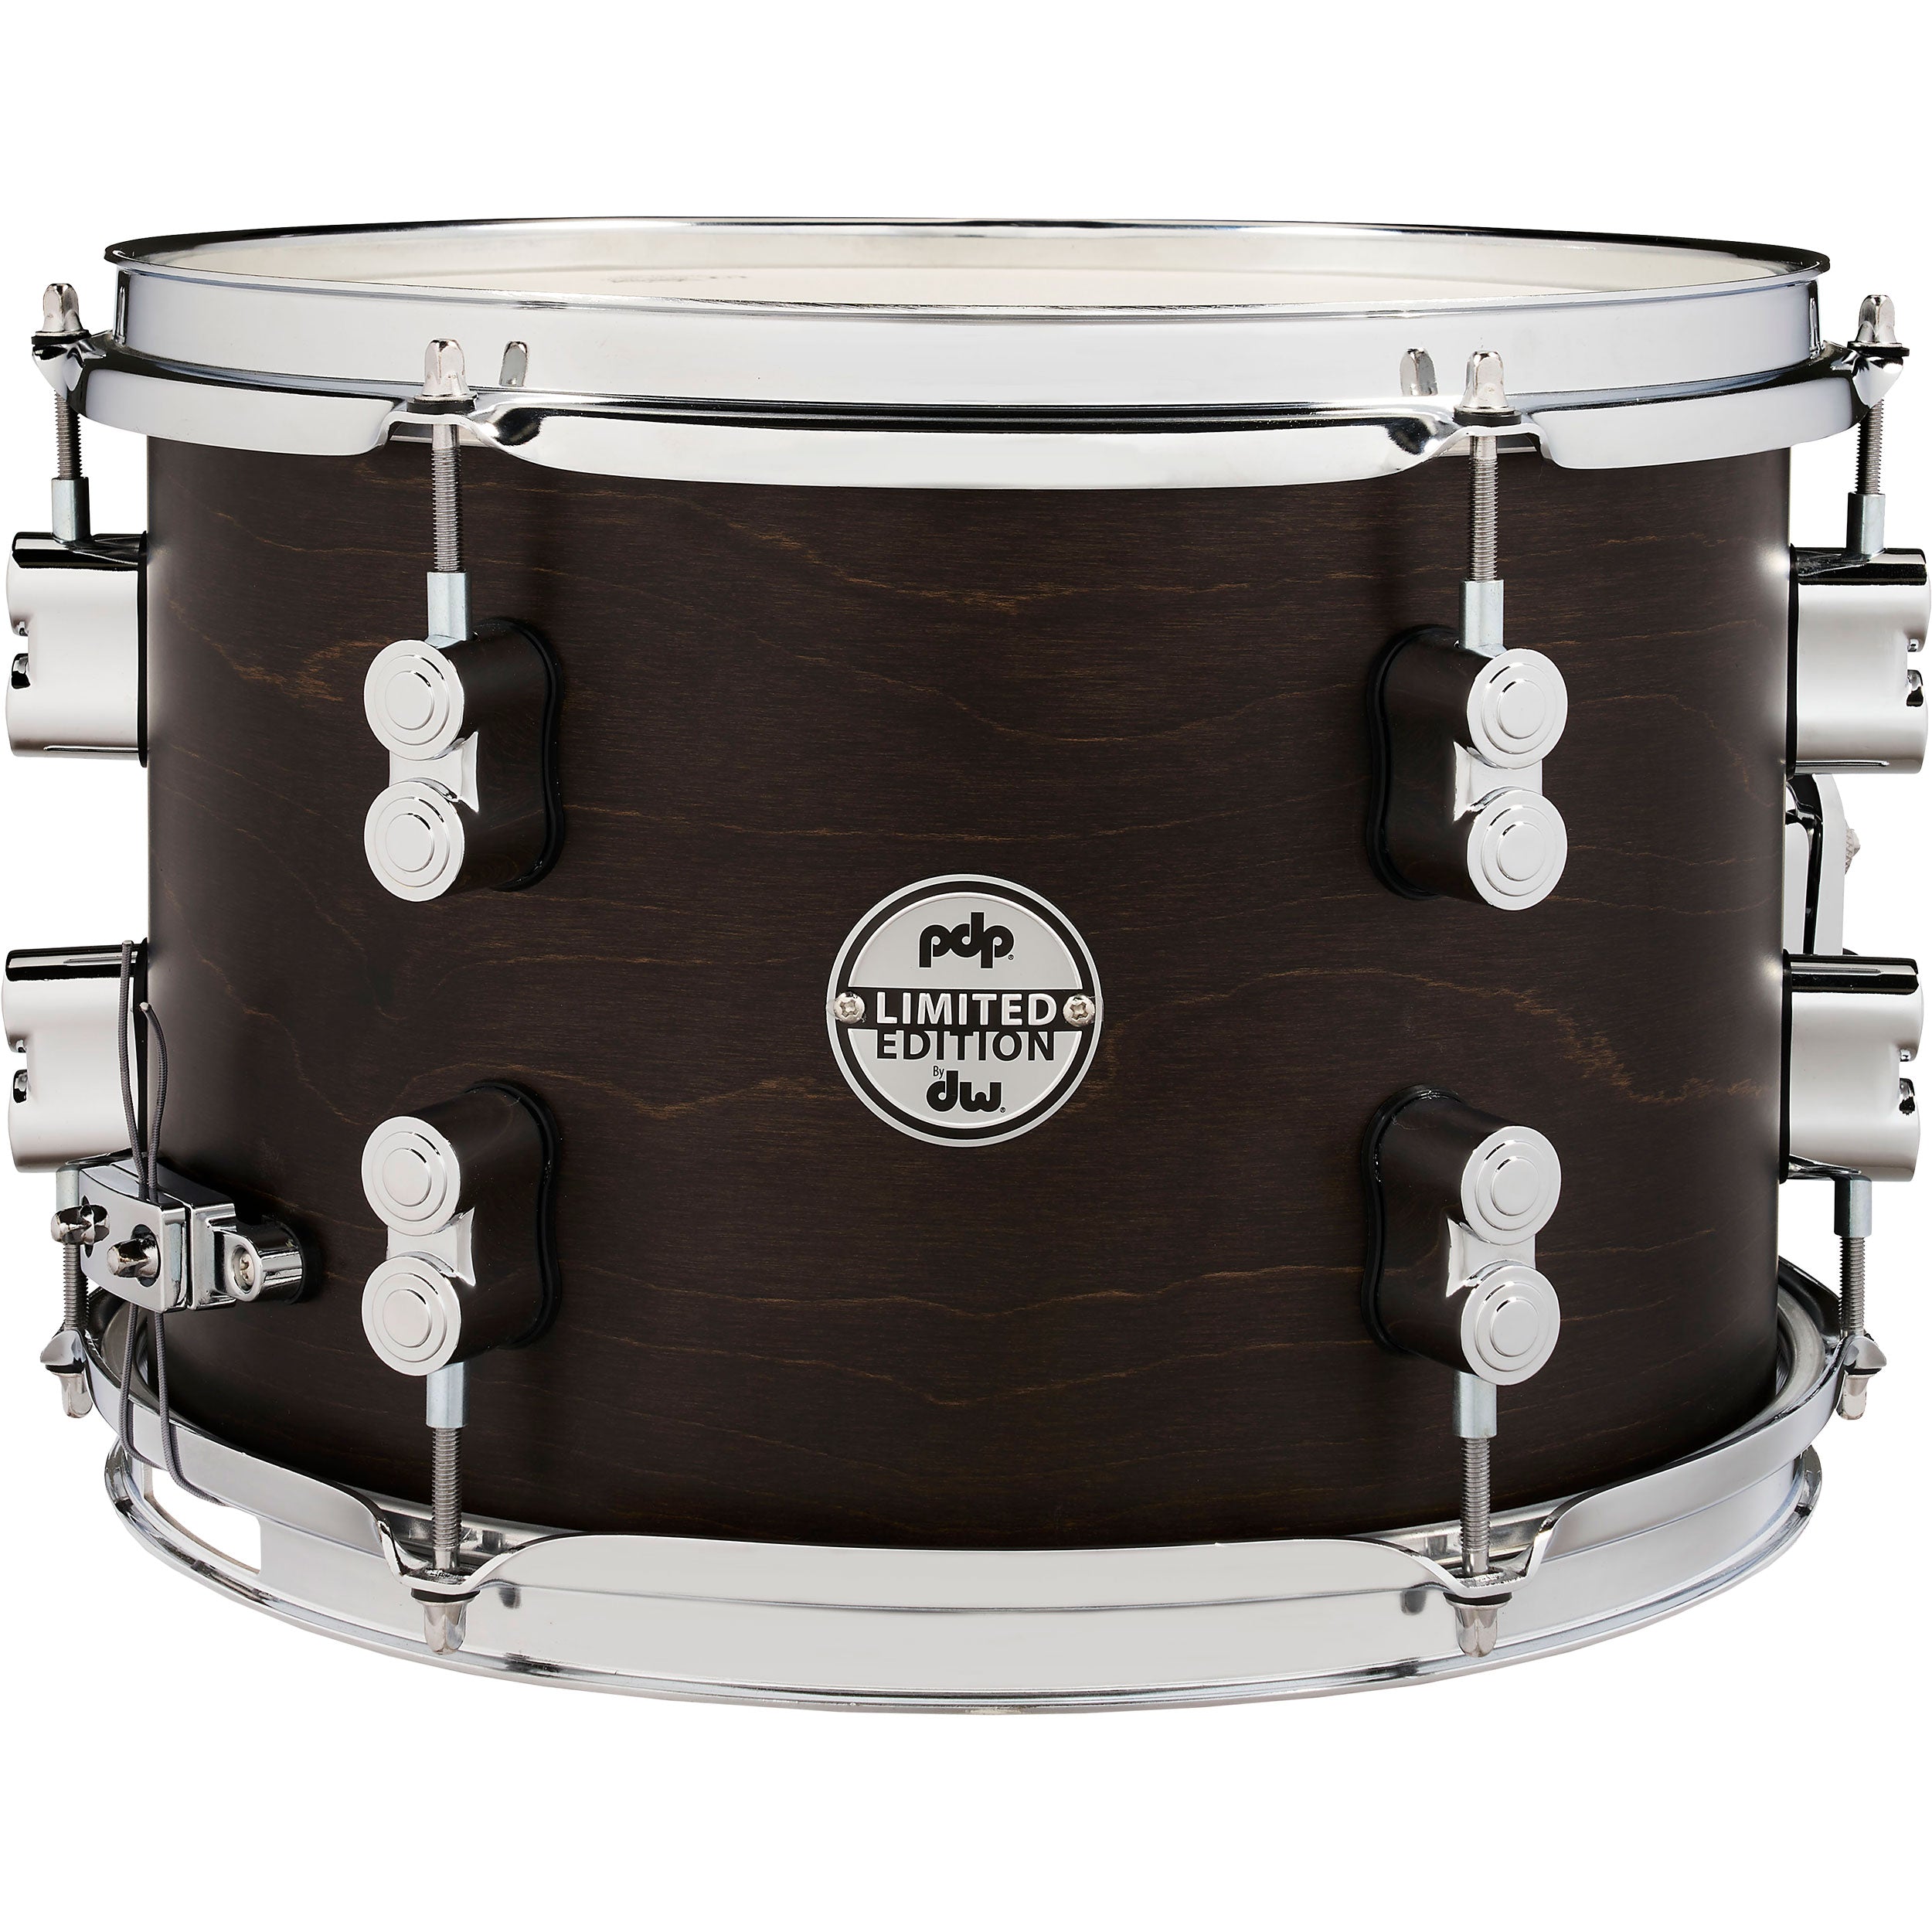 PDP Limited Edition Maple Snare Drum 8" X 12" Dark Walnut